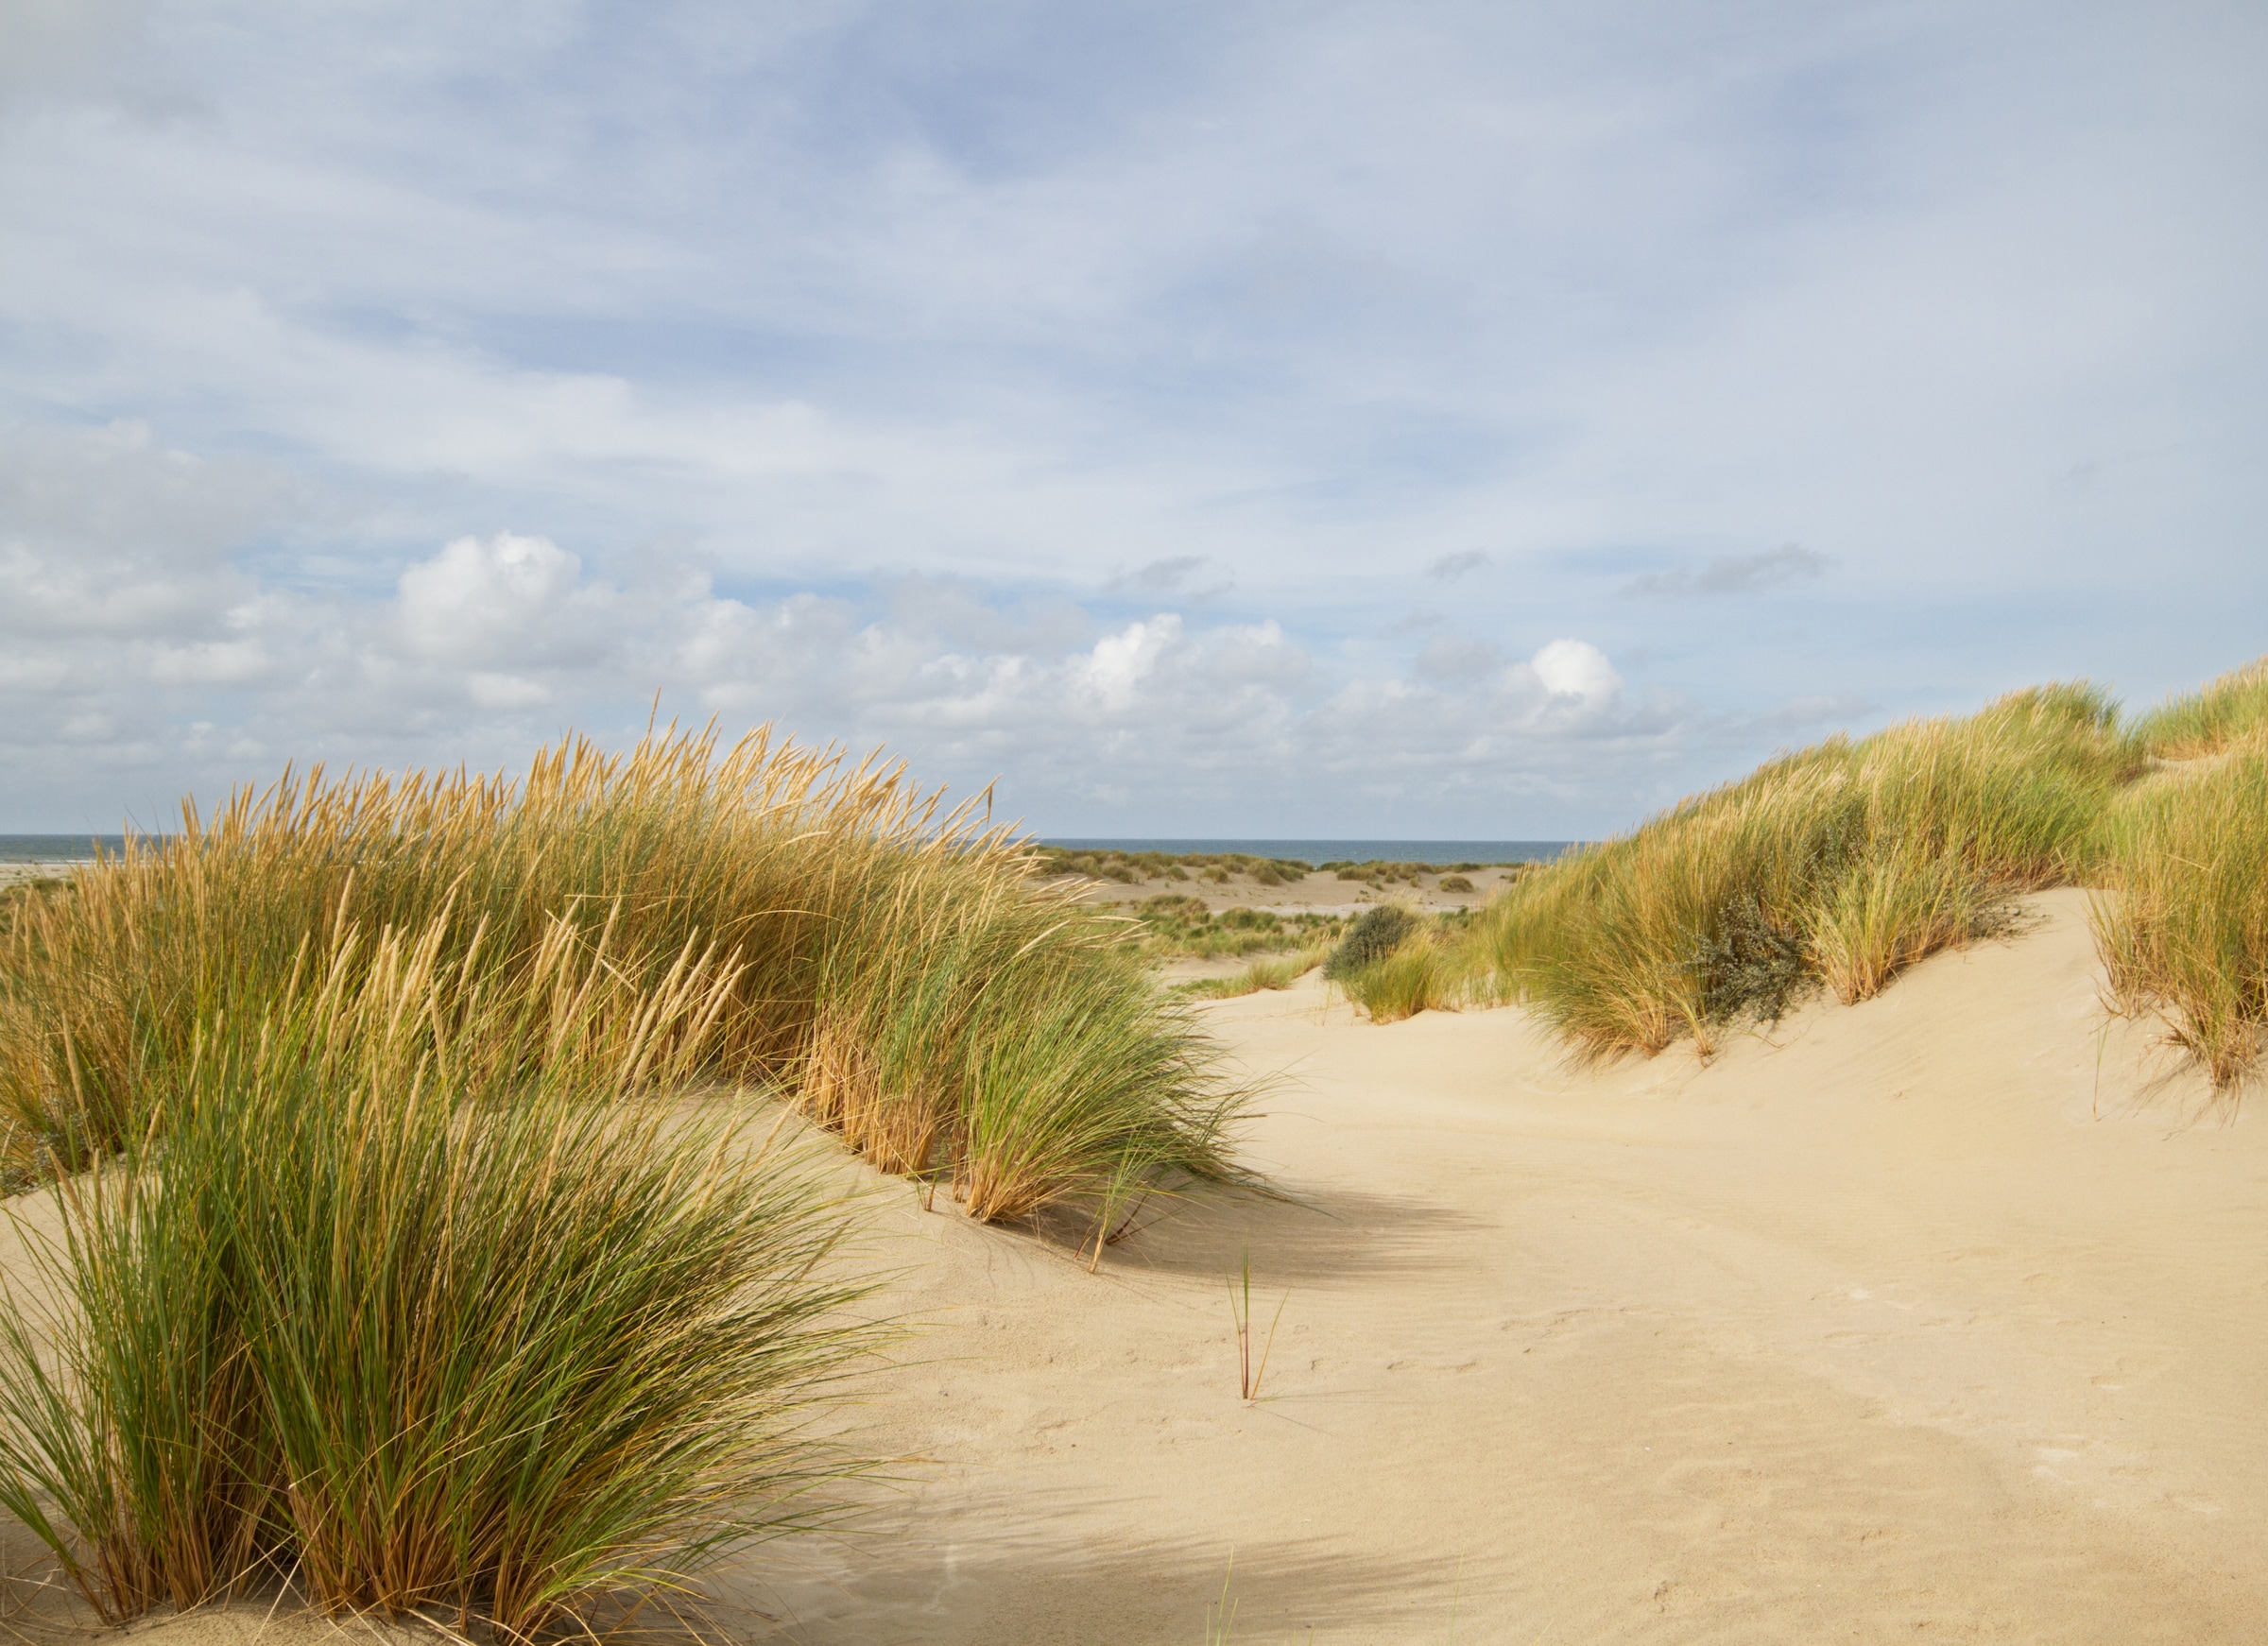 Papermoon Fototapete "Dunes Grass"